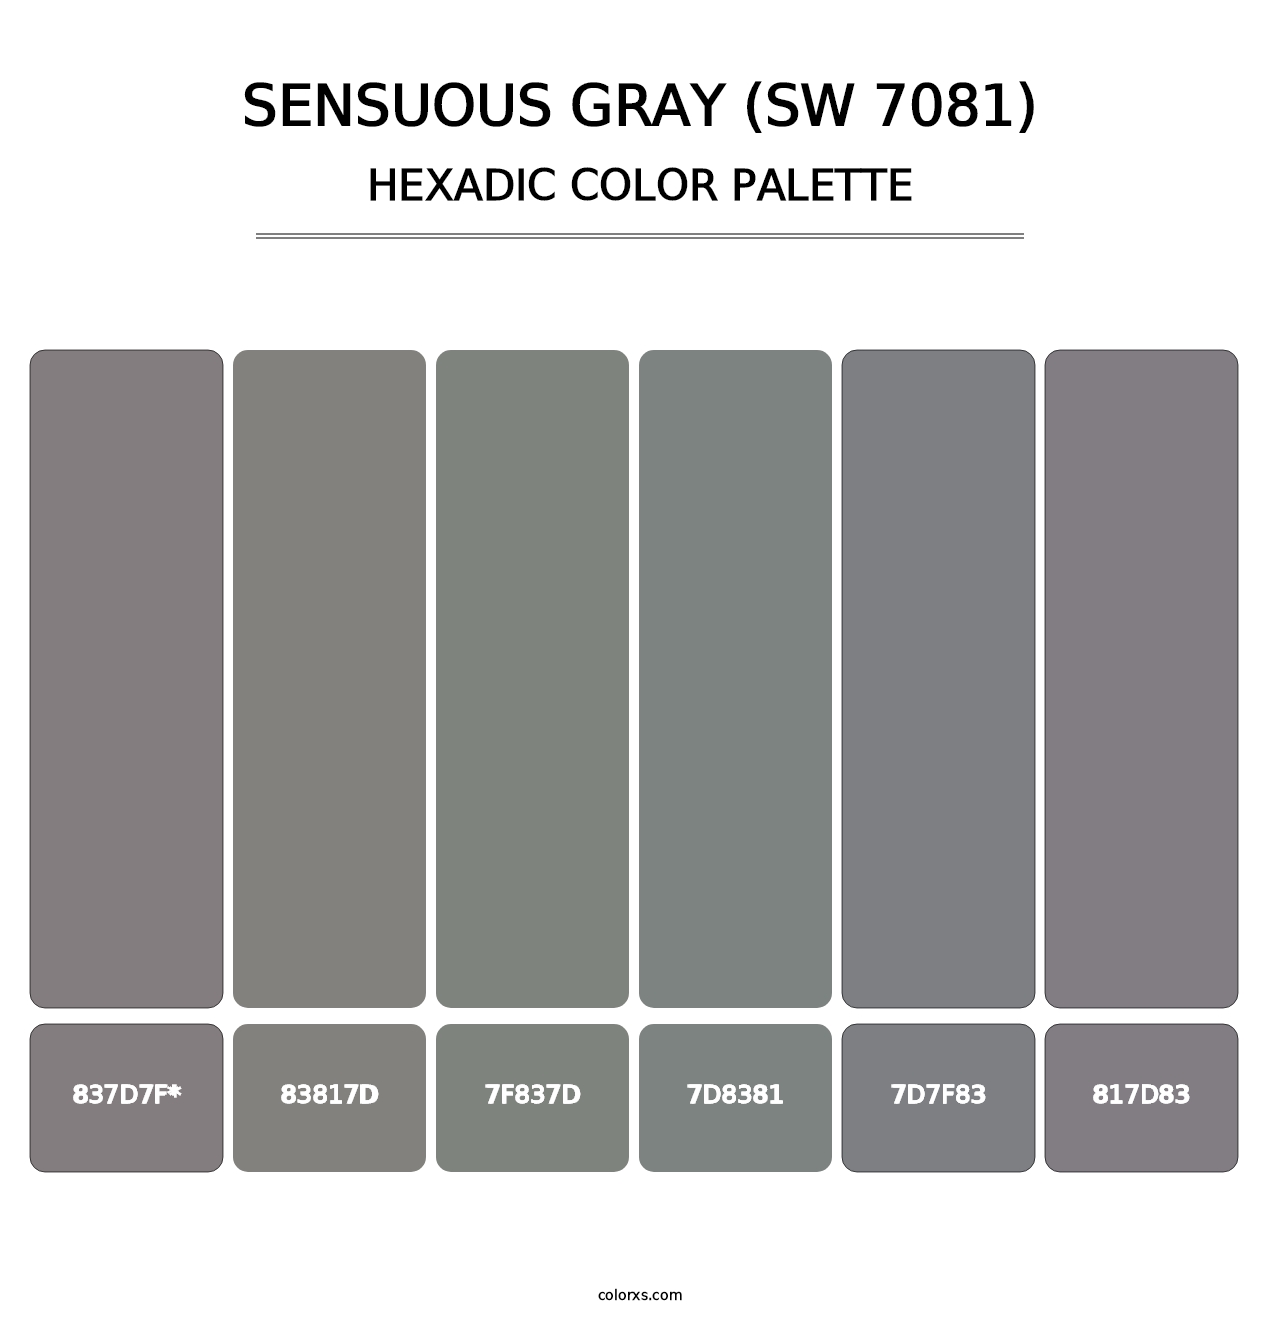 Sensuous Gray (SW 7081) - Hexadic Color Palette